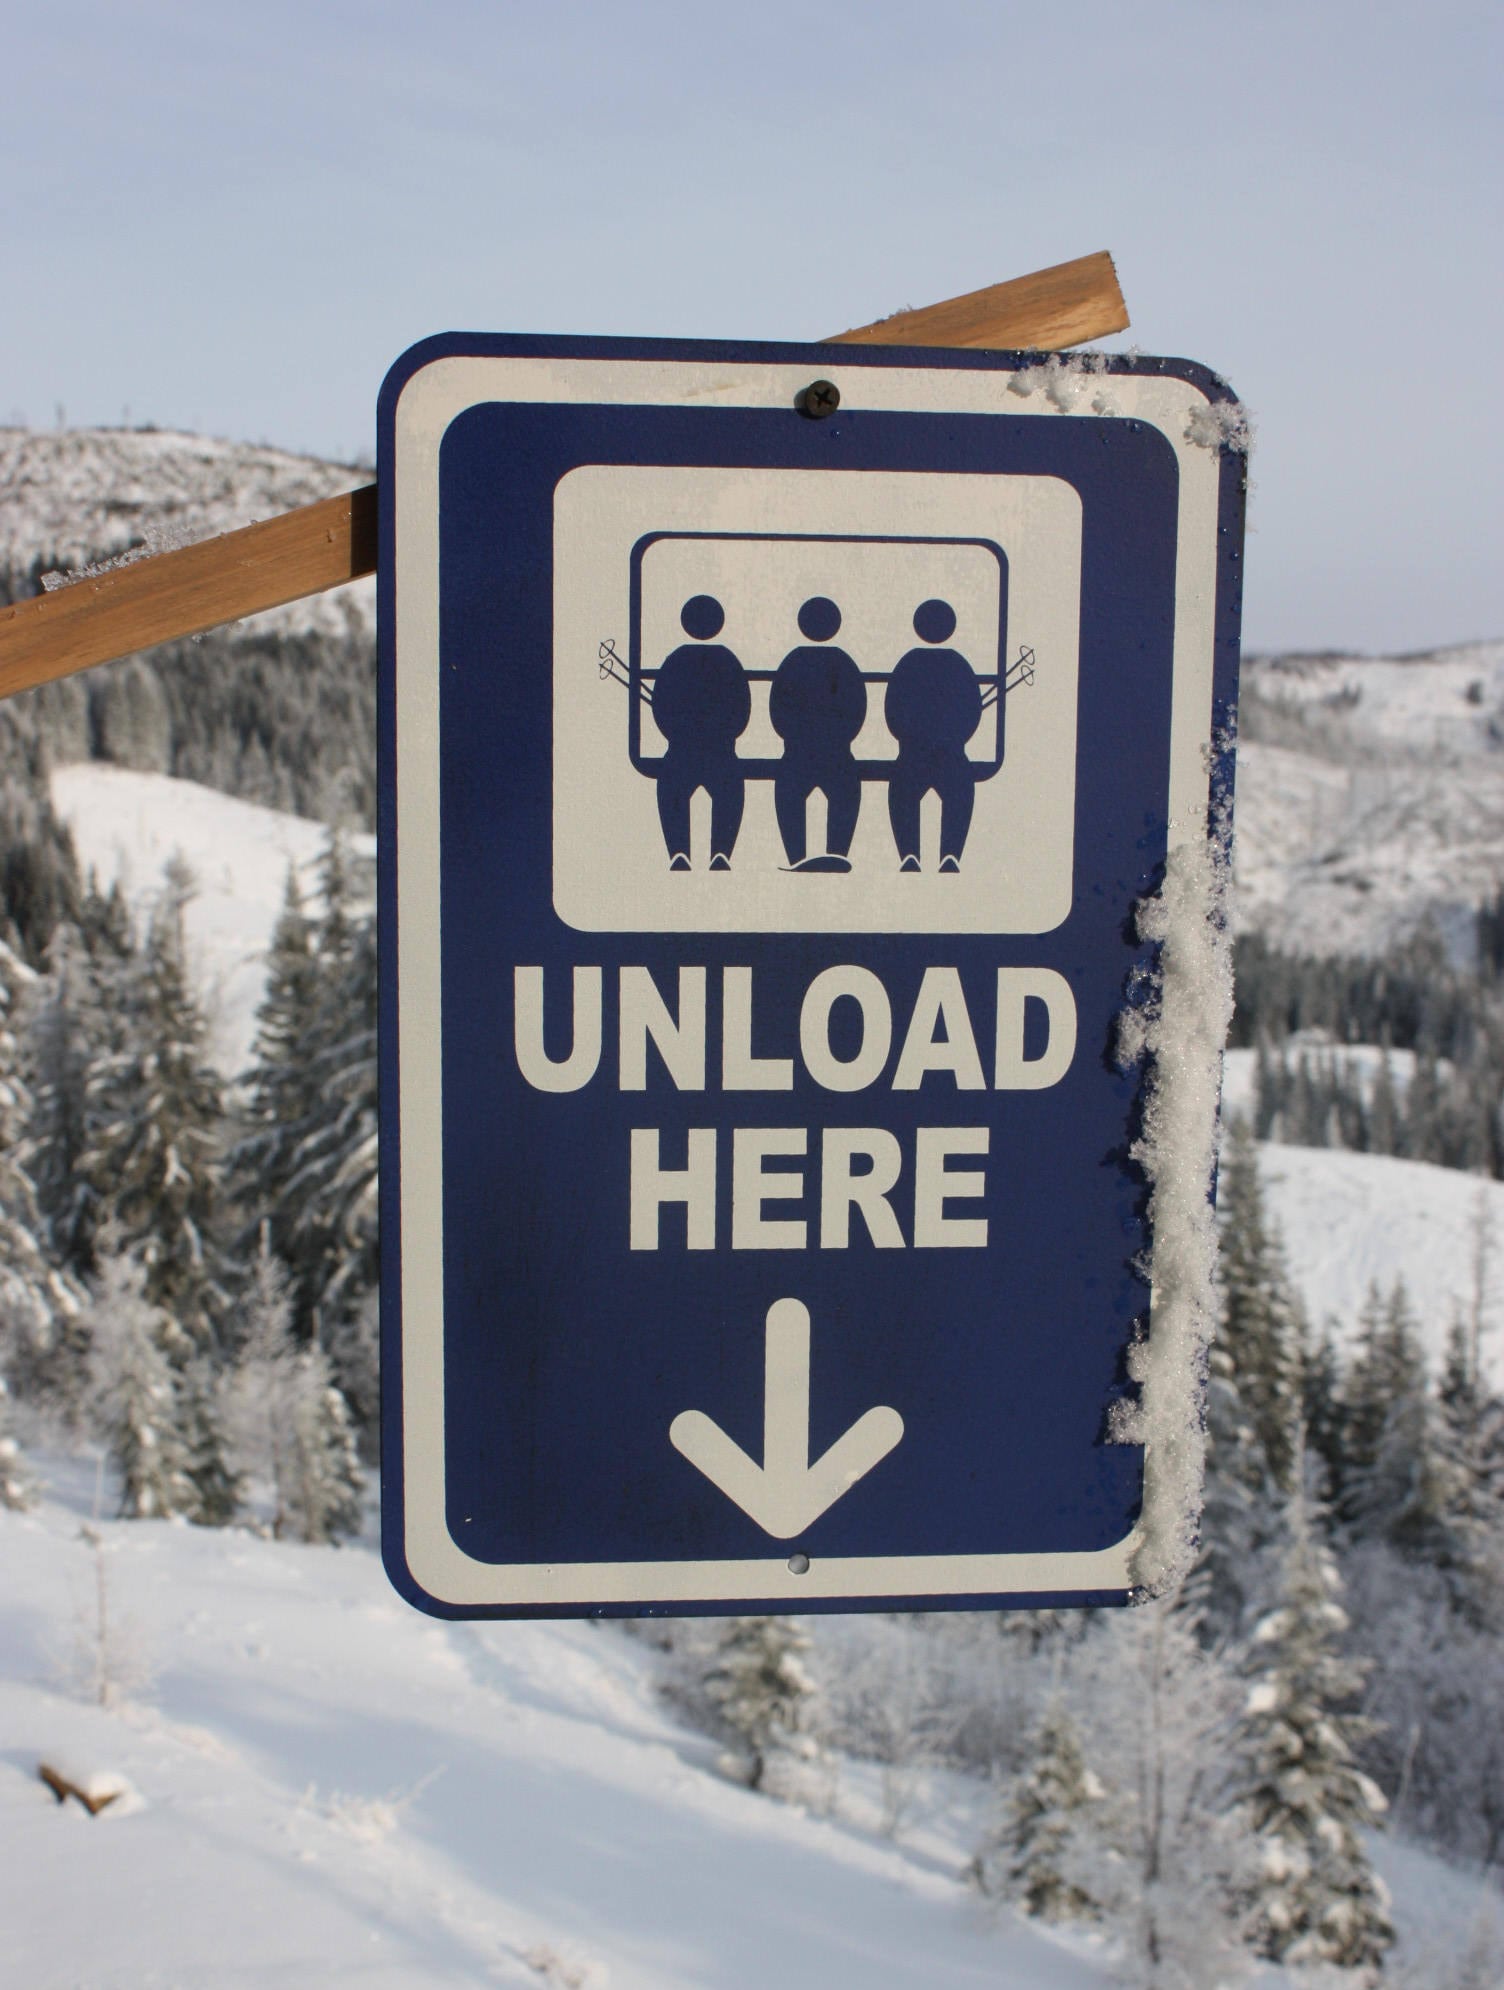 Snwboarding Novelty Metal Wall Sign Skiing  Pub Sign Ski Slope Snwboard Sign